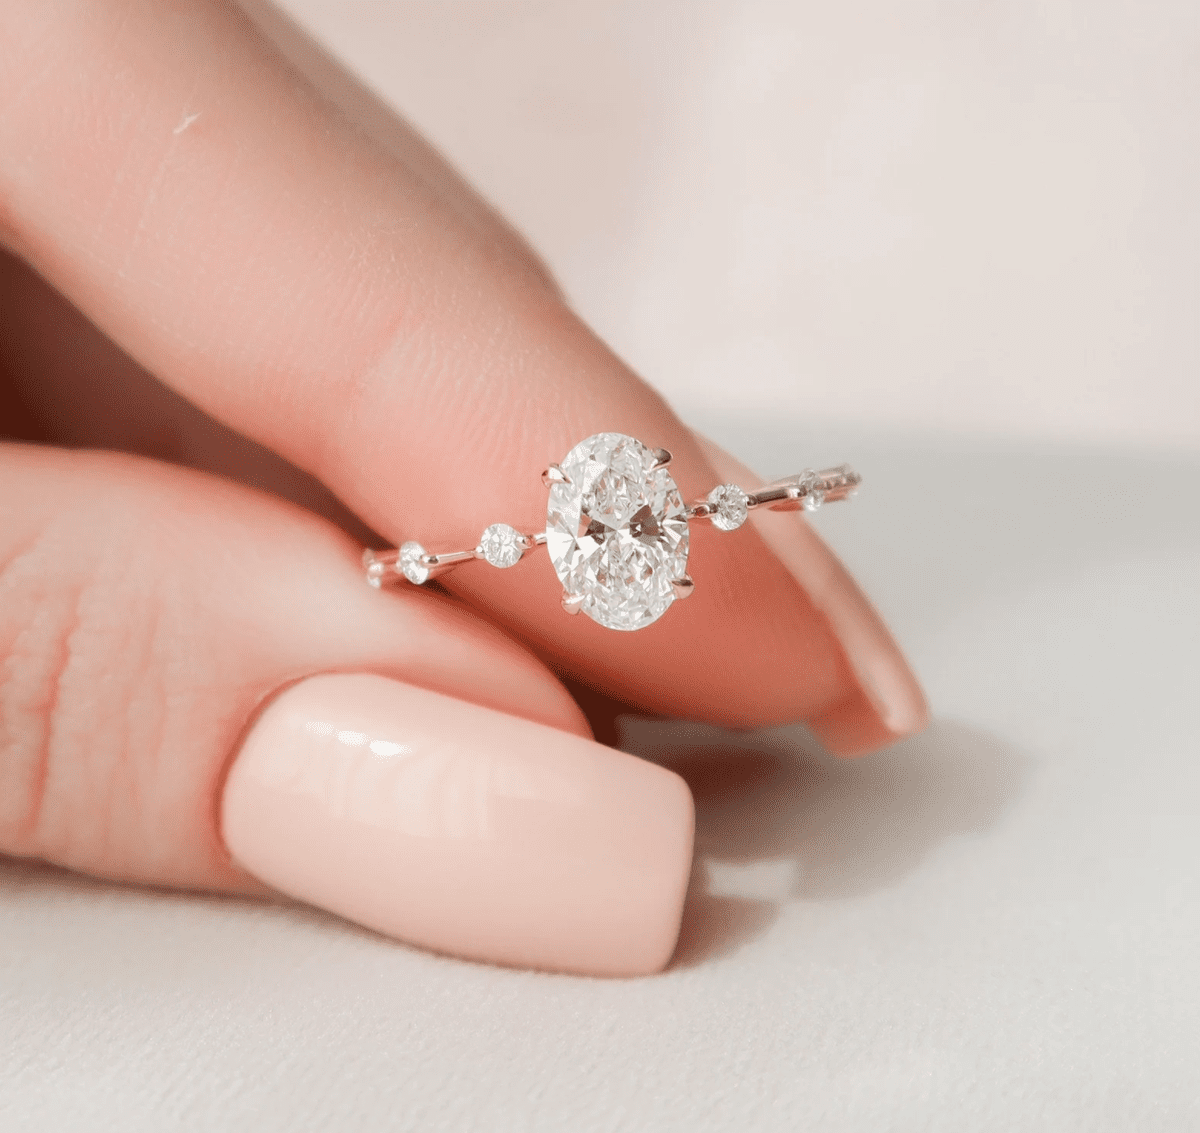 FUYY Rotating Ring Delicate Diamond Ring Opening Design Wedding Ring Ring Woman 